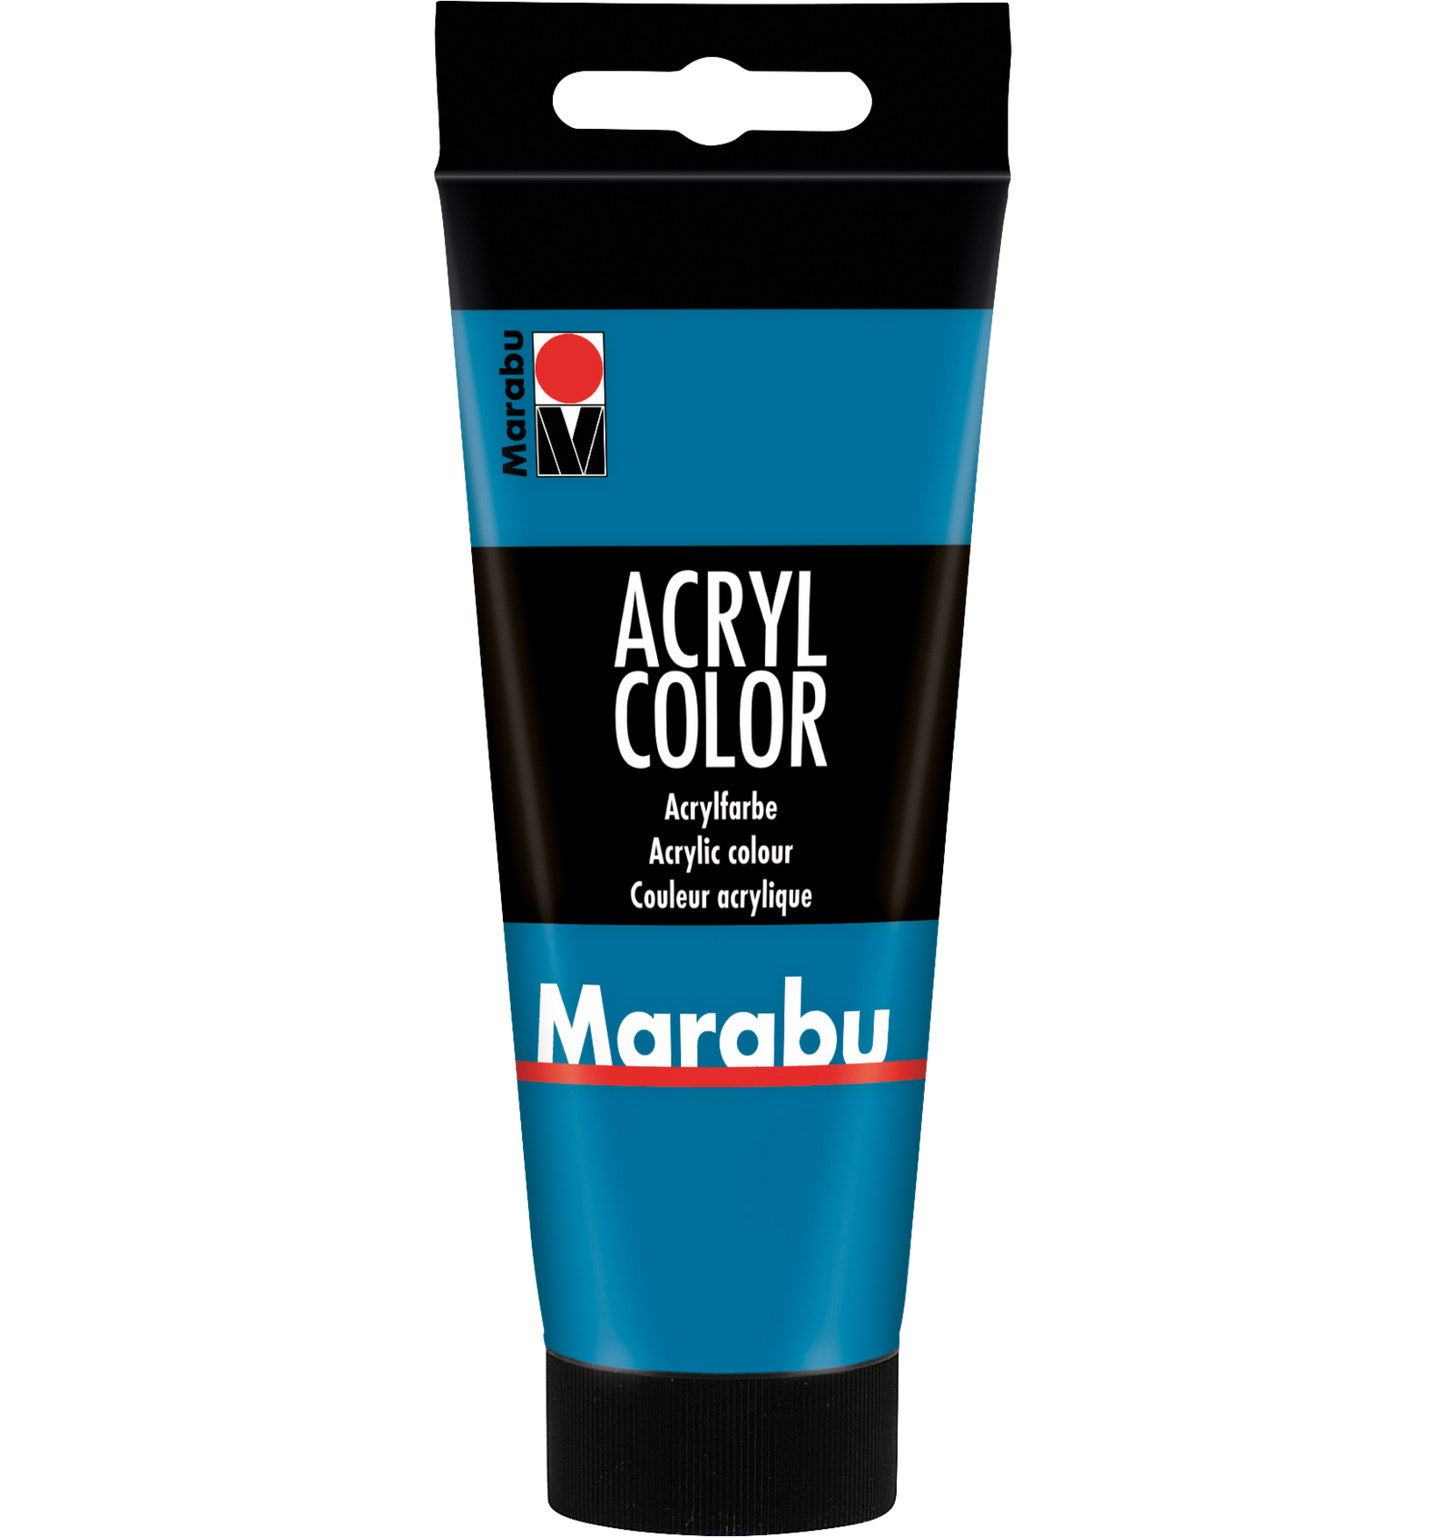 Marabu Acrylfarbe, Acryl color, Cyan, 100 ml